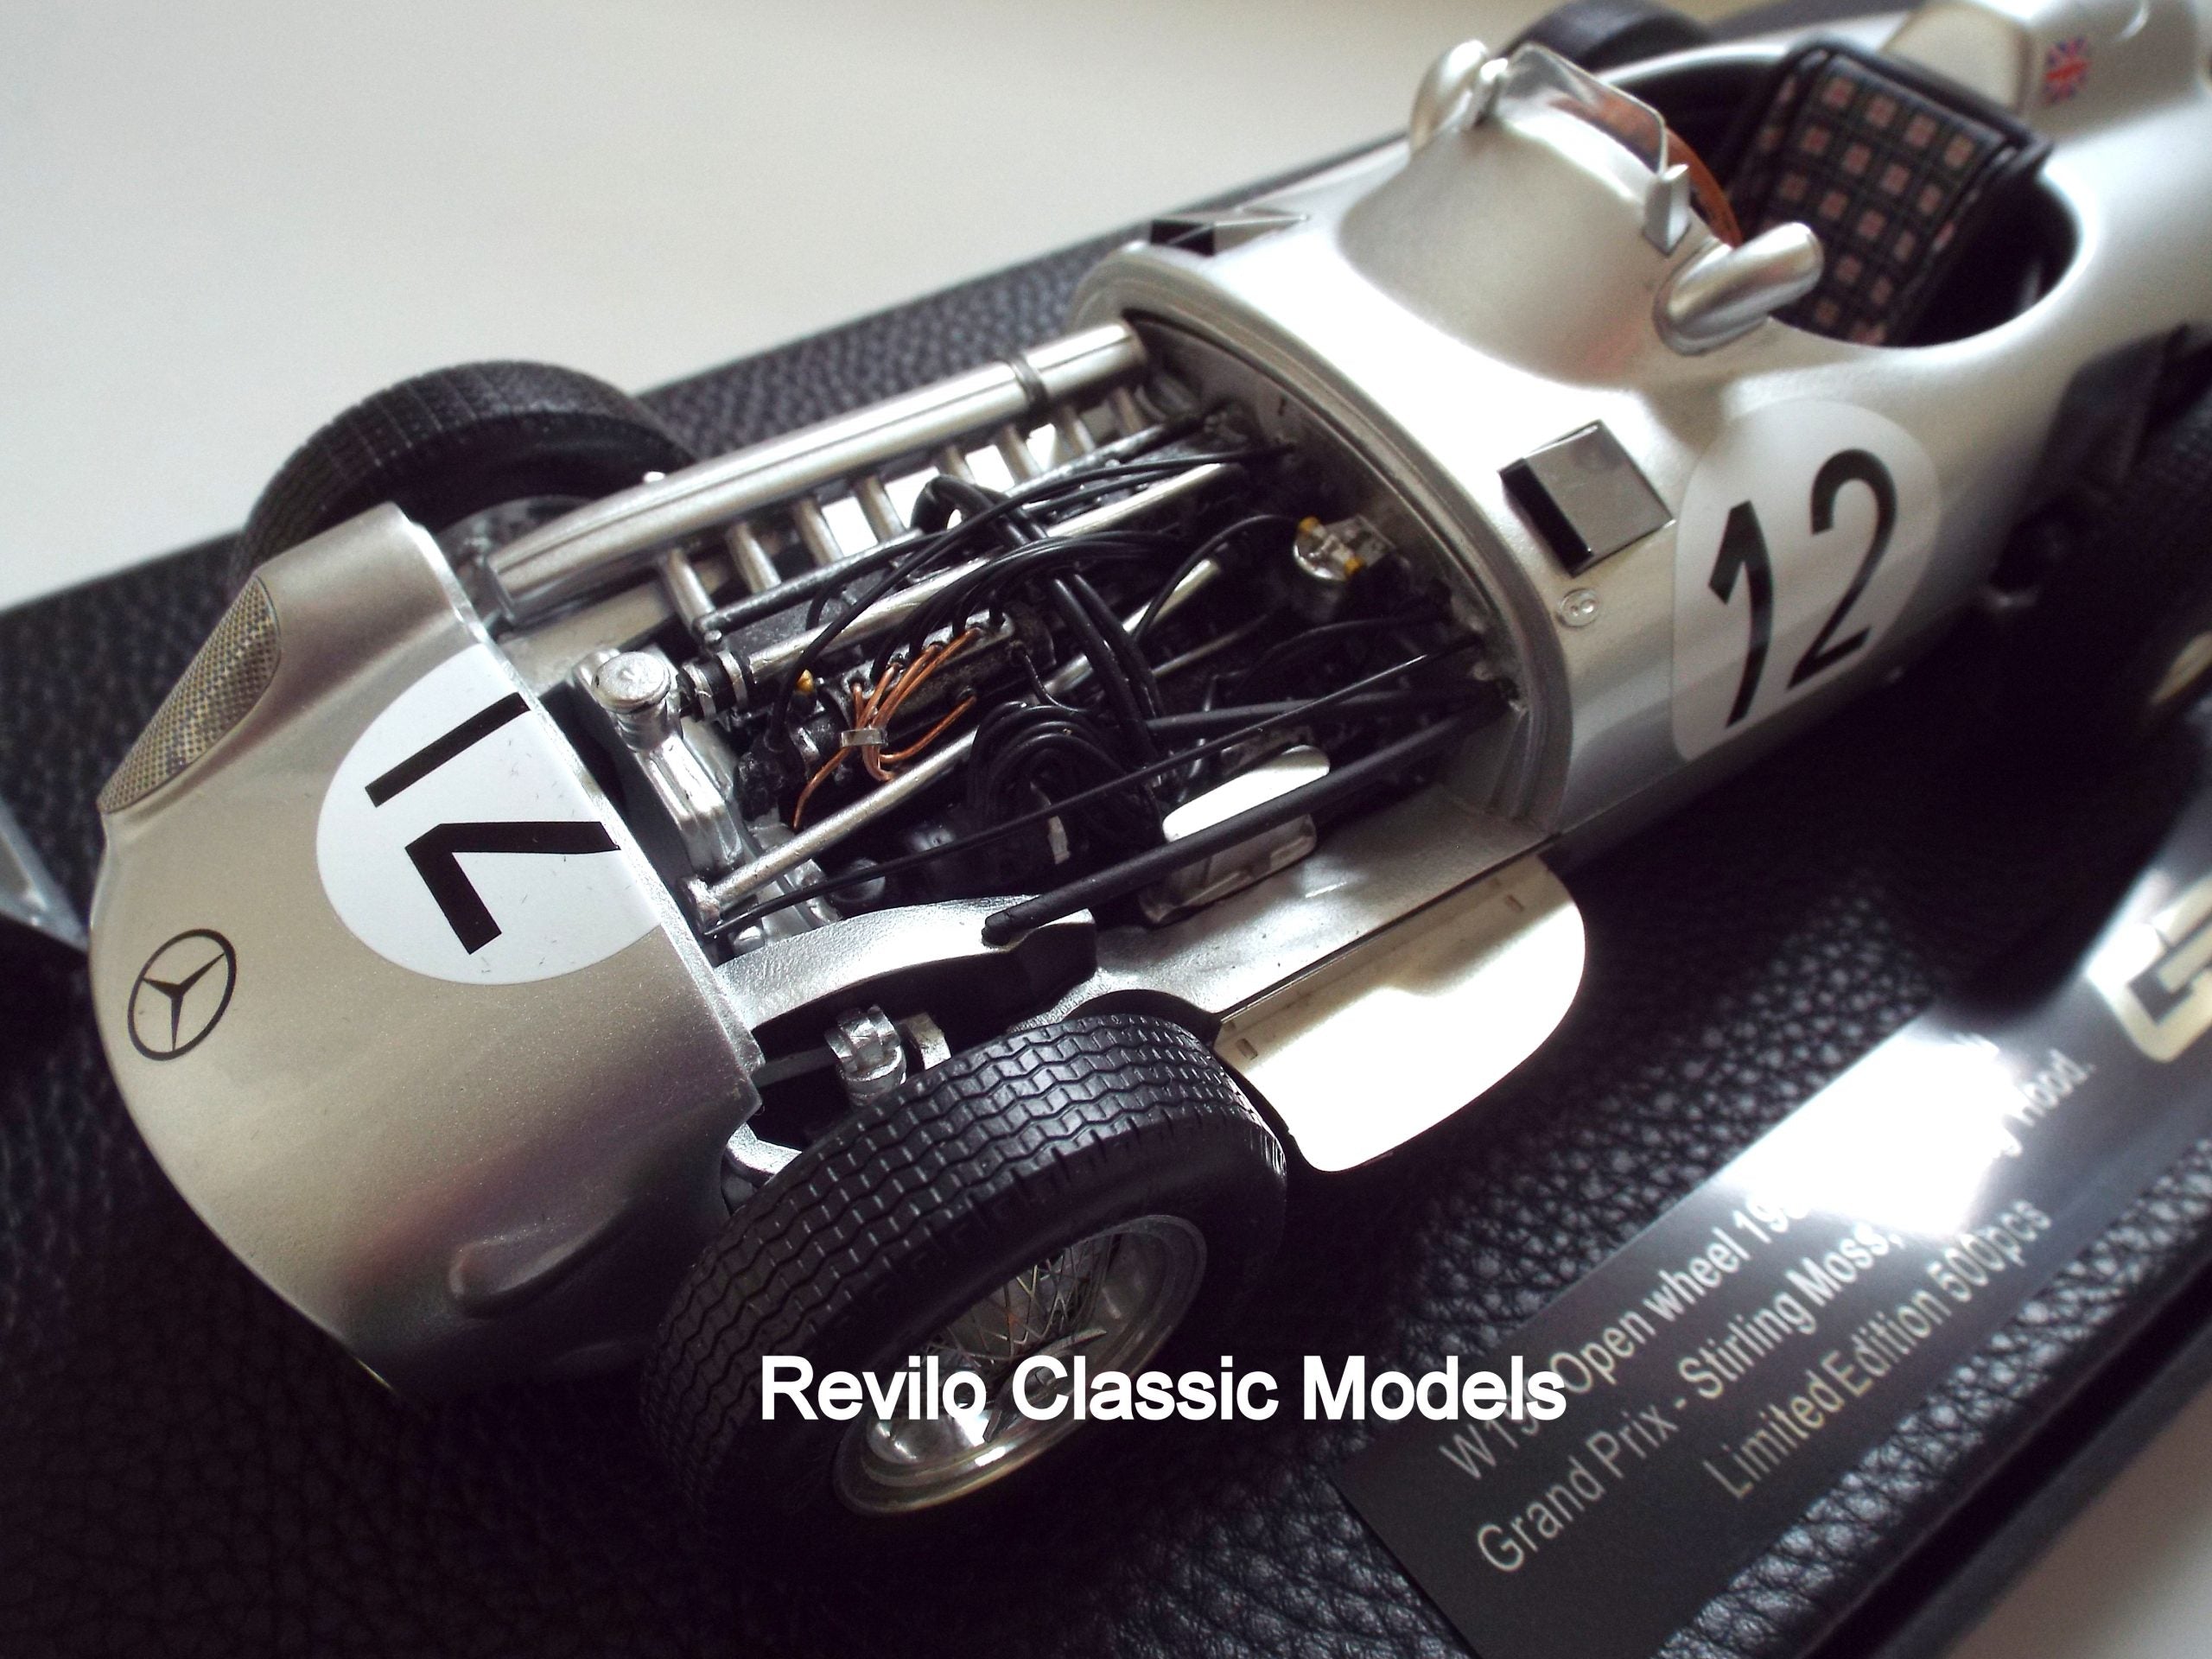 Mercedes W196 Stirling Moss #12 escala 1:18